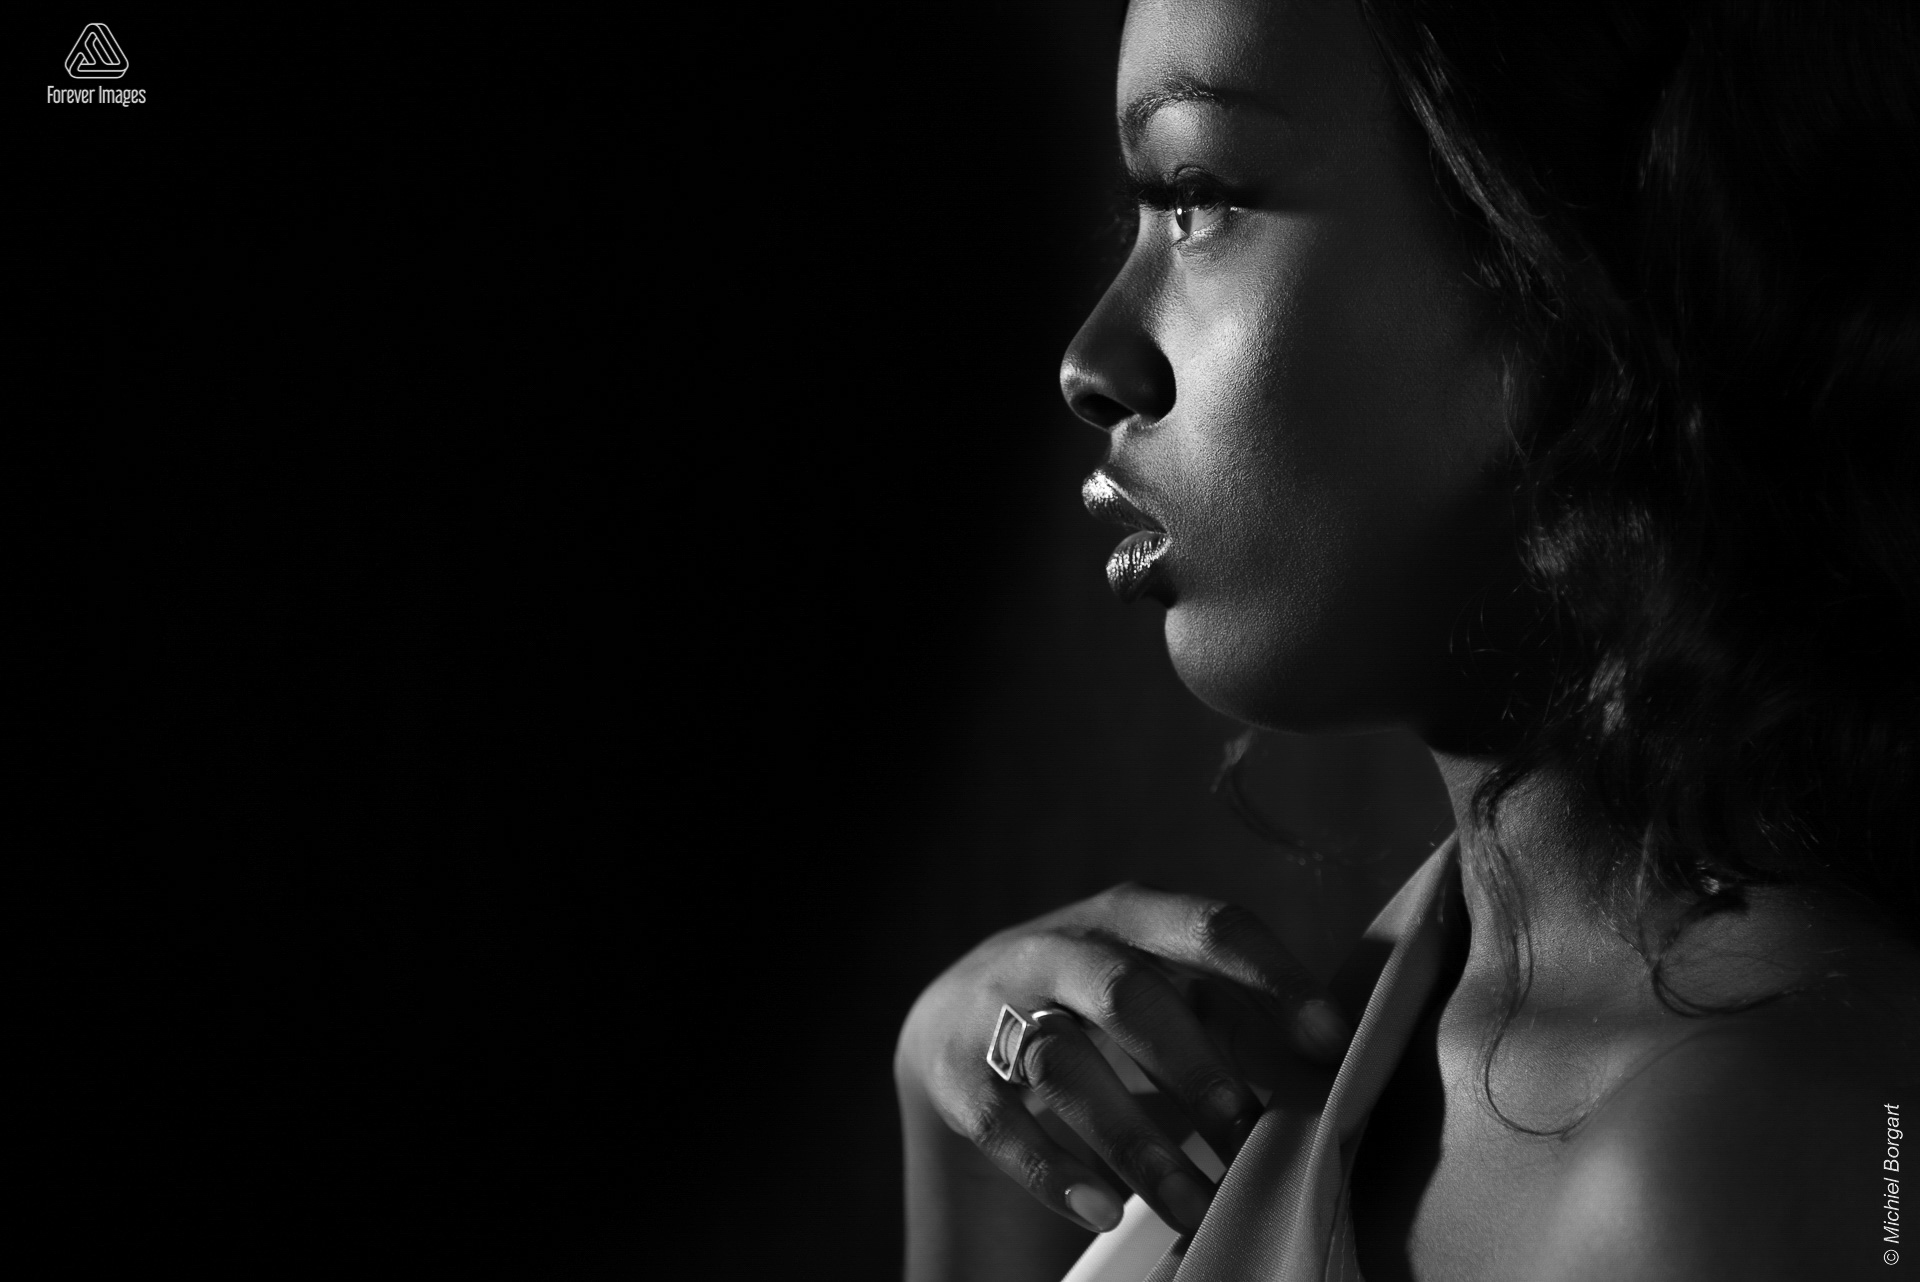 Portrait photo black and white B&W low key | Stephanie Omogun Miss Eco Netherlands Vicky Foundation | Portrait Photographer Michiel Borgart - Forever Images.